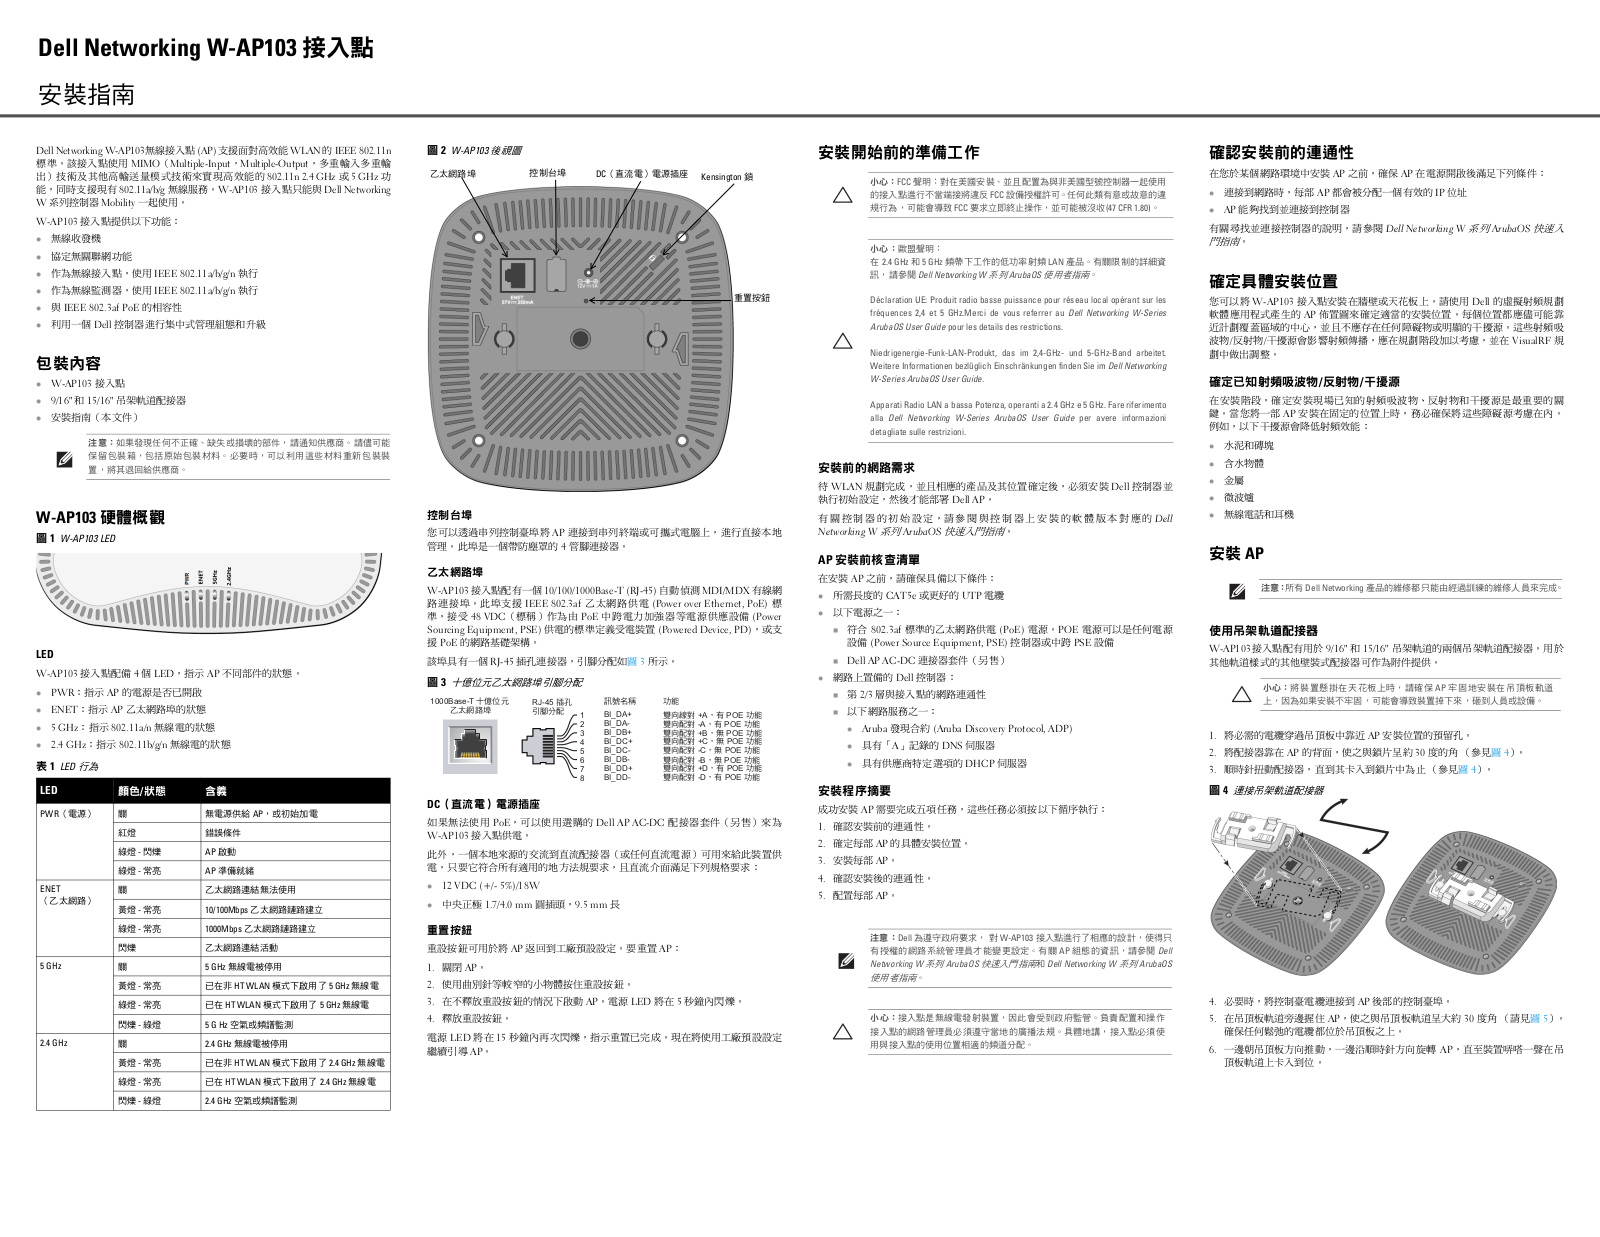 Dell W-AP103 User Manual